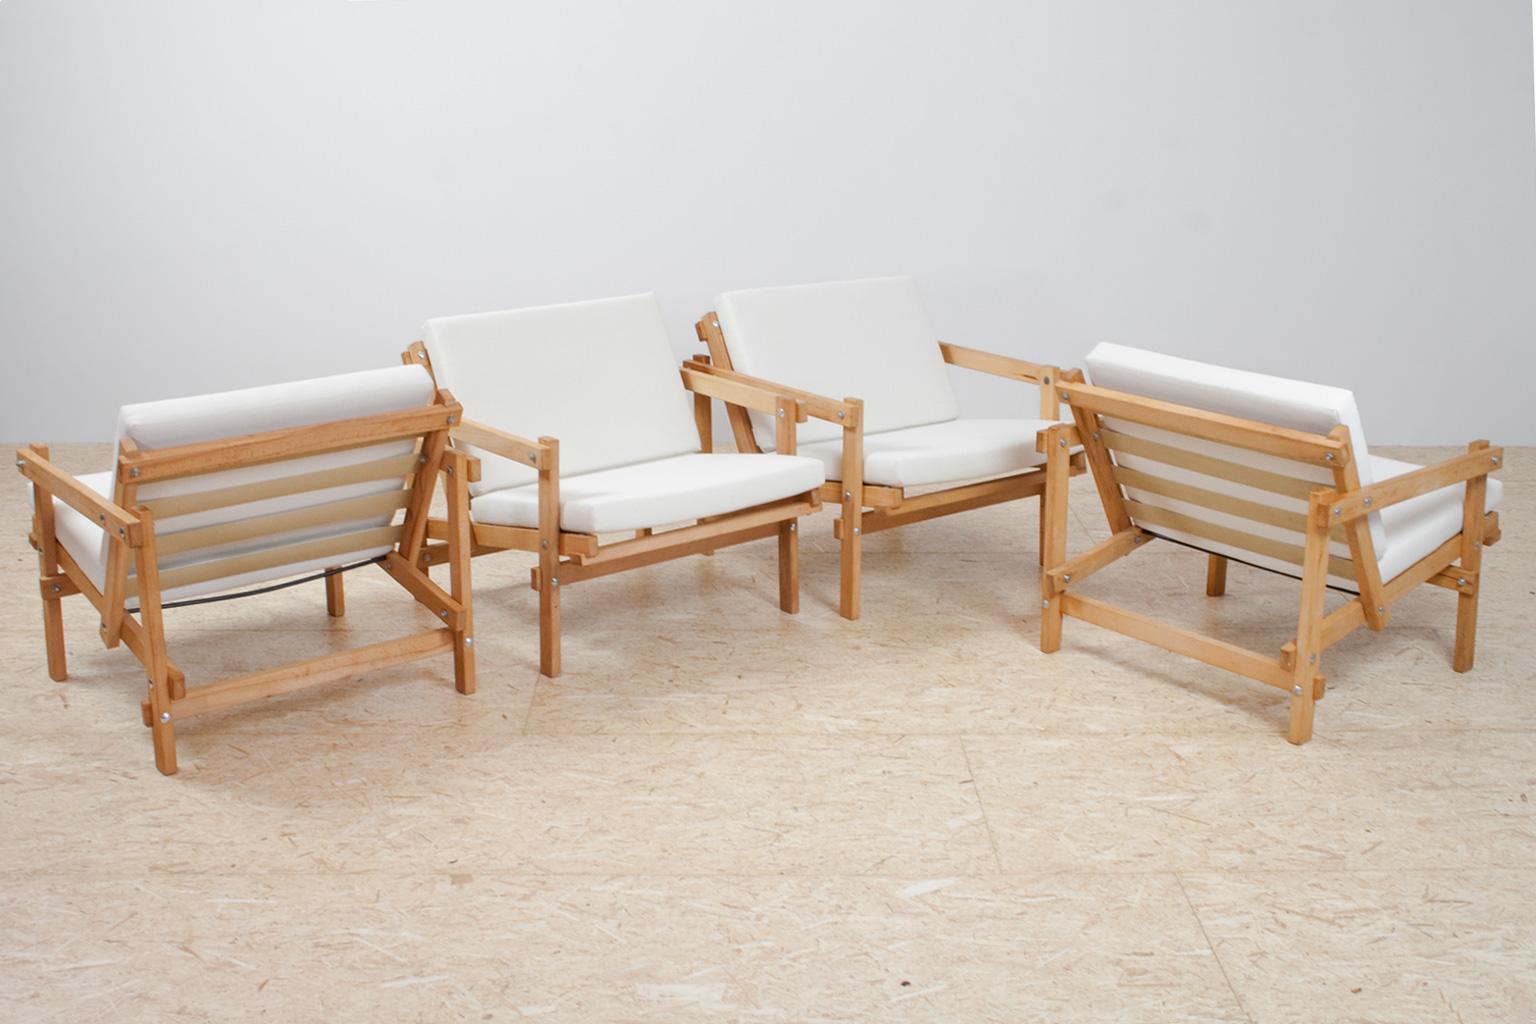 Dutch Bauhaus inspired set of 4 Lounge Chairs in Beech by Martin Visser 1974-1986